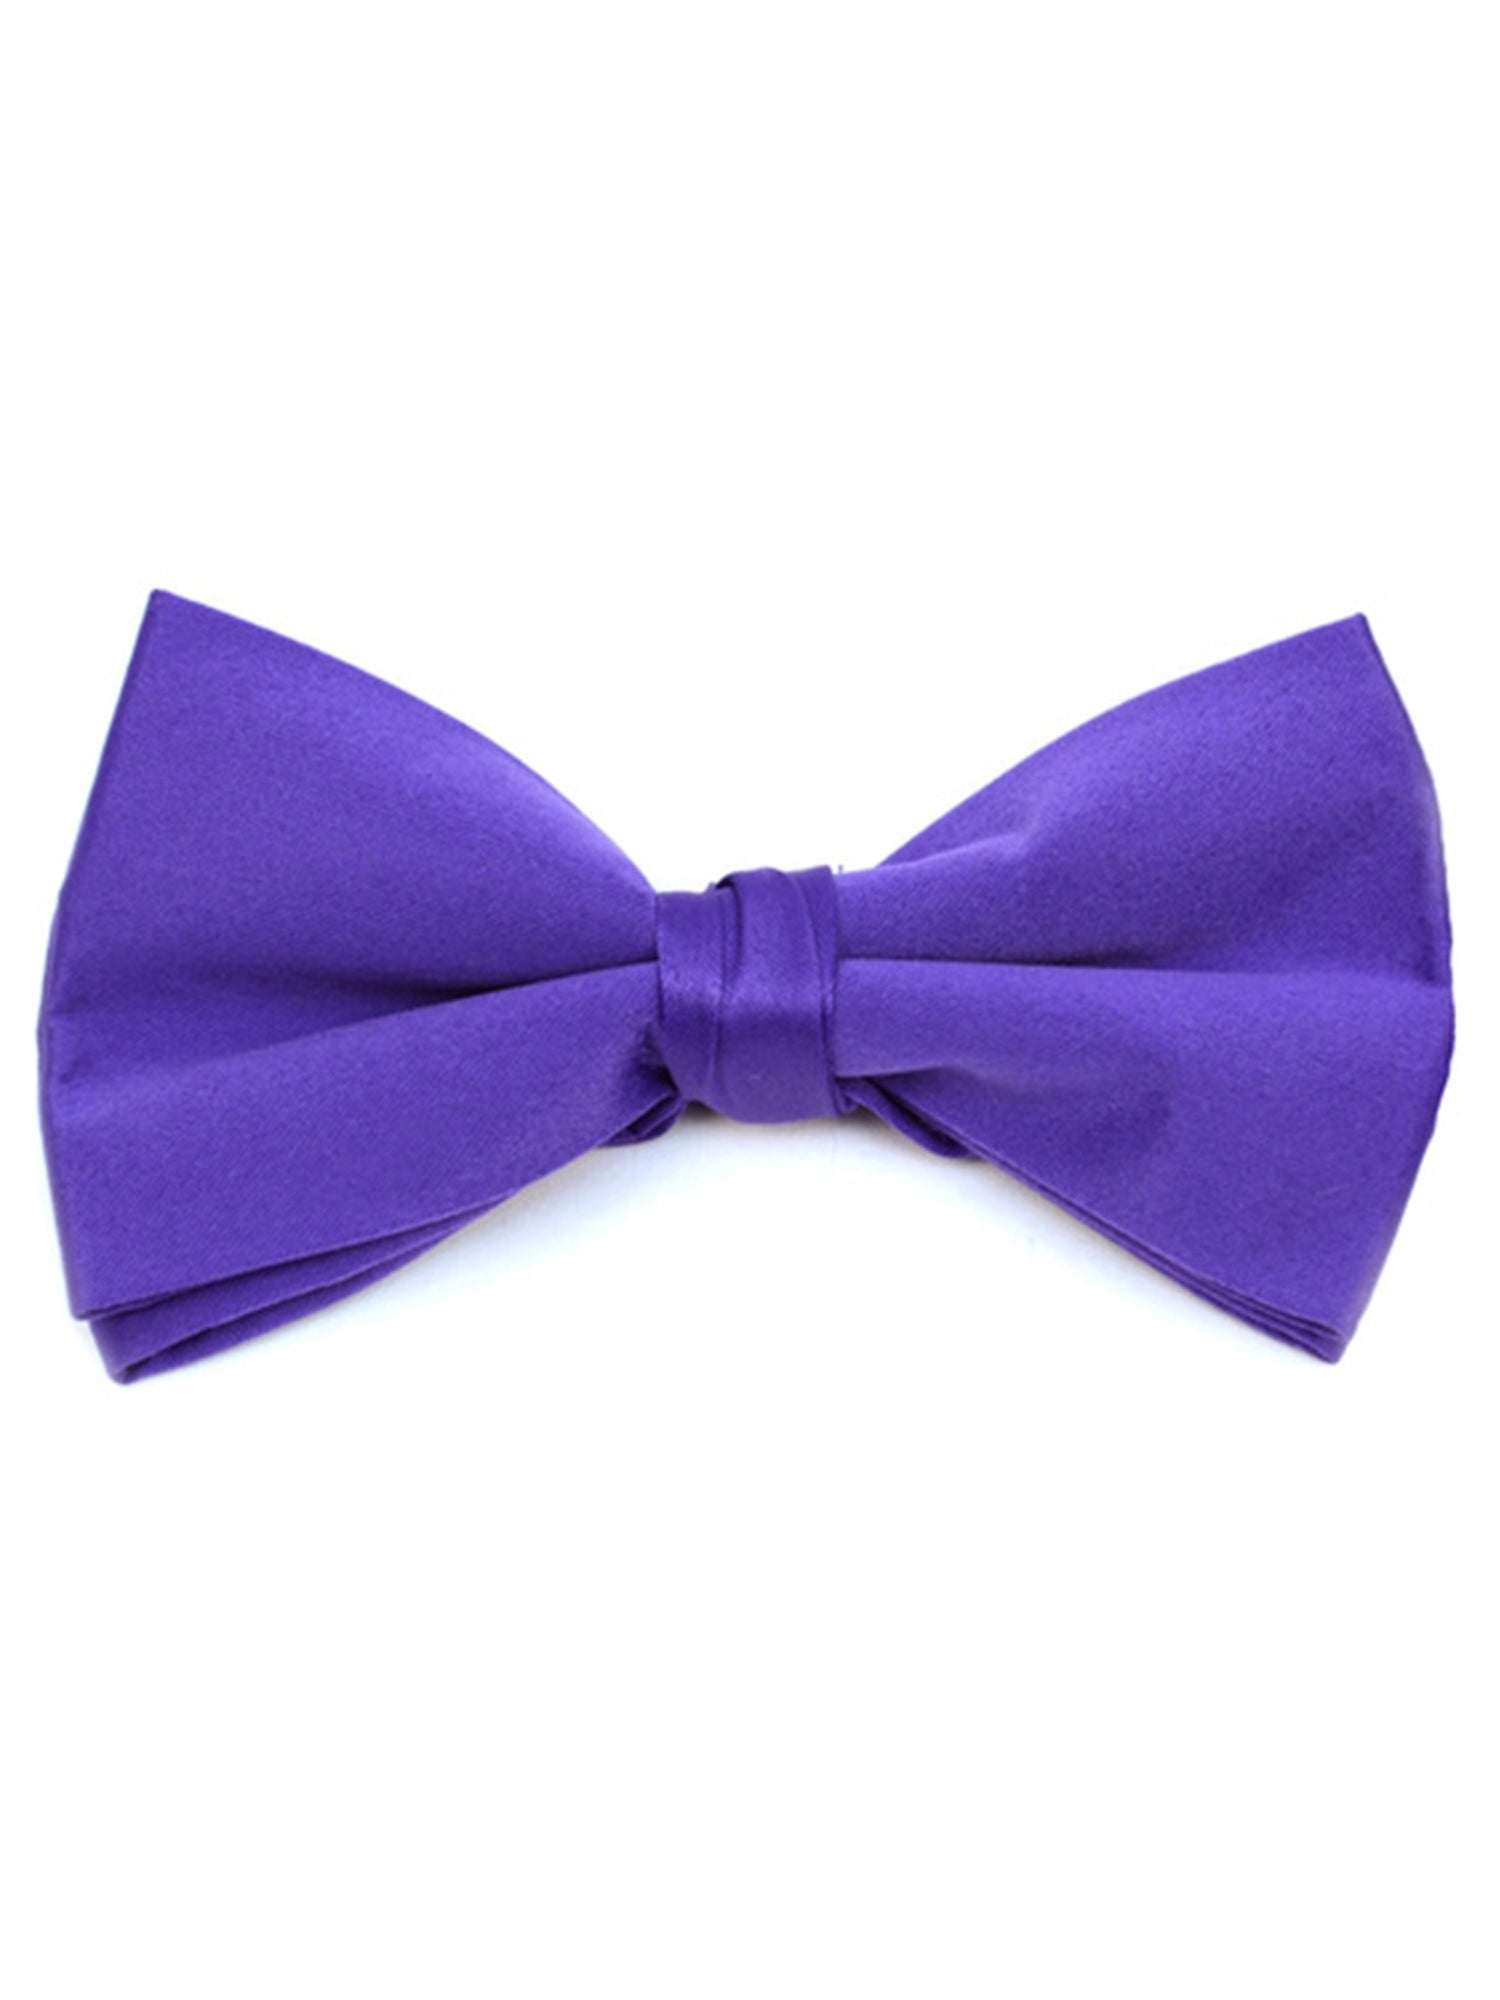 Men's Pre-tied Adjustable Length Bow Tie - Formal Tuxedo Solid Color Men's Solid Color Bow Tie TheDapperTie Purple One Size 